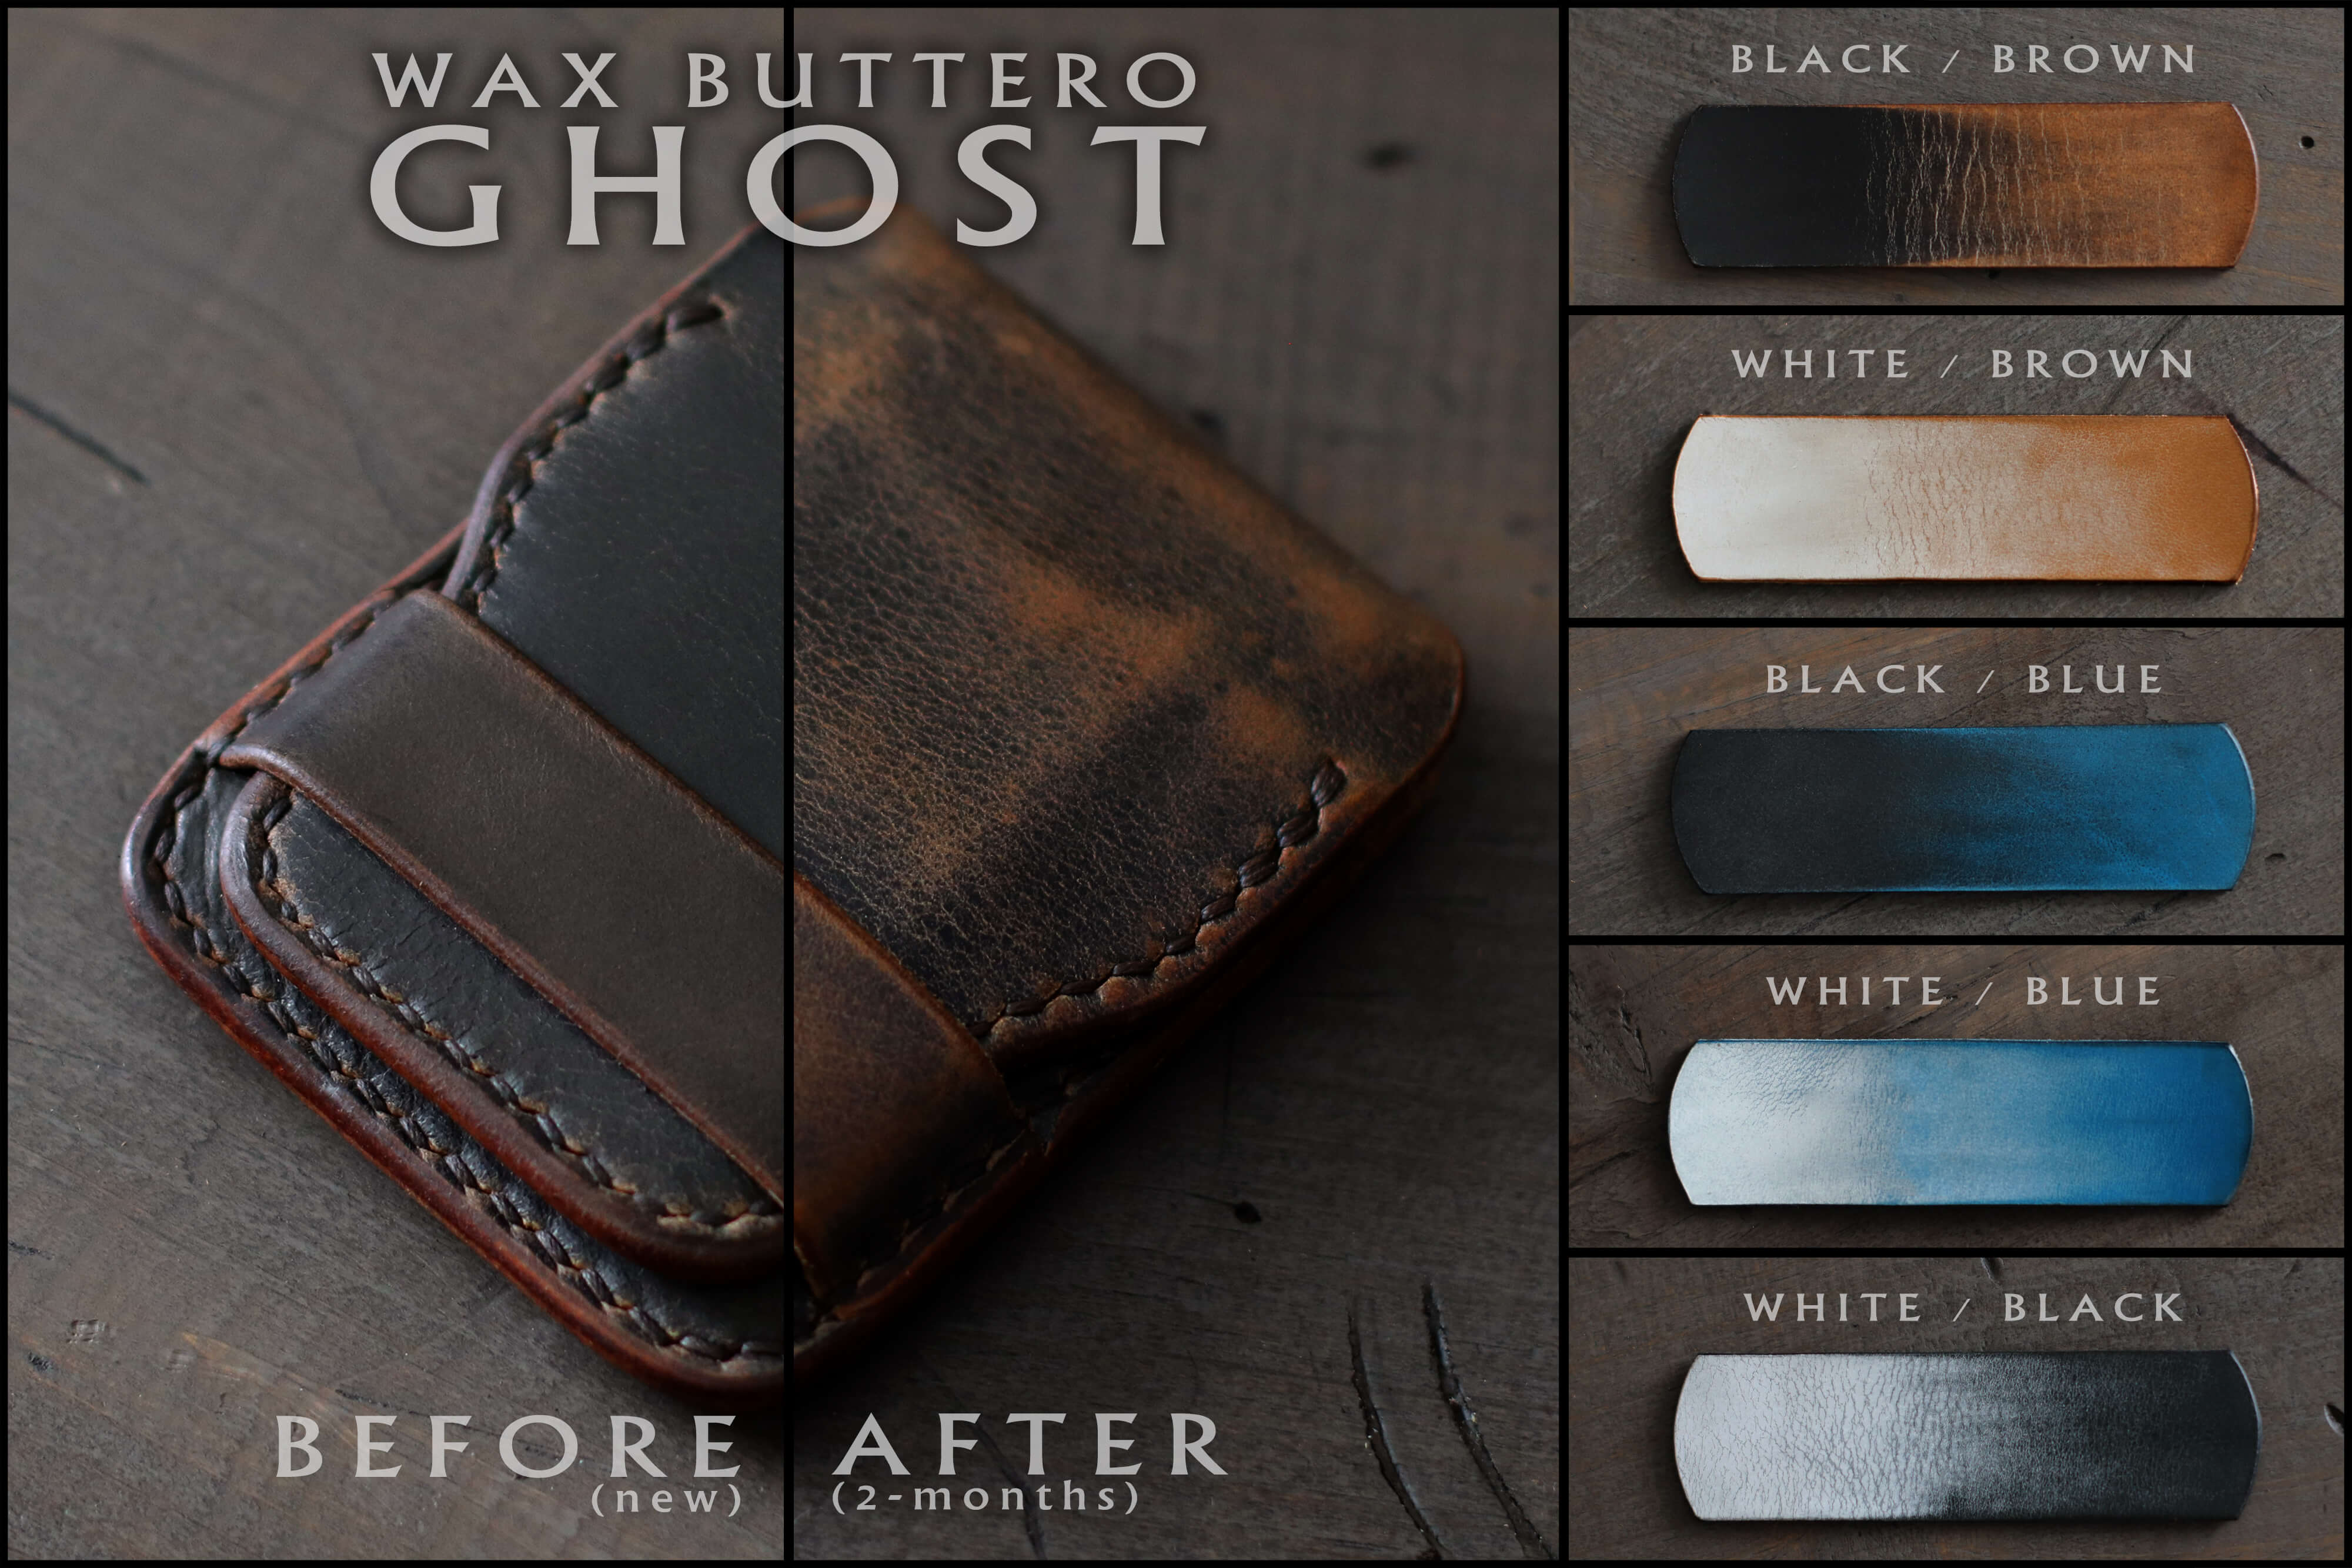 the OCHRE handcrafted FLIP wallet in waxed Buttero Ghost leather